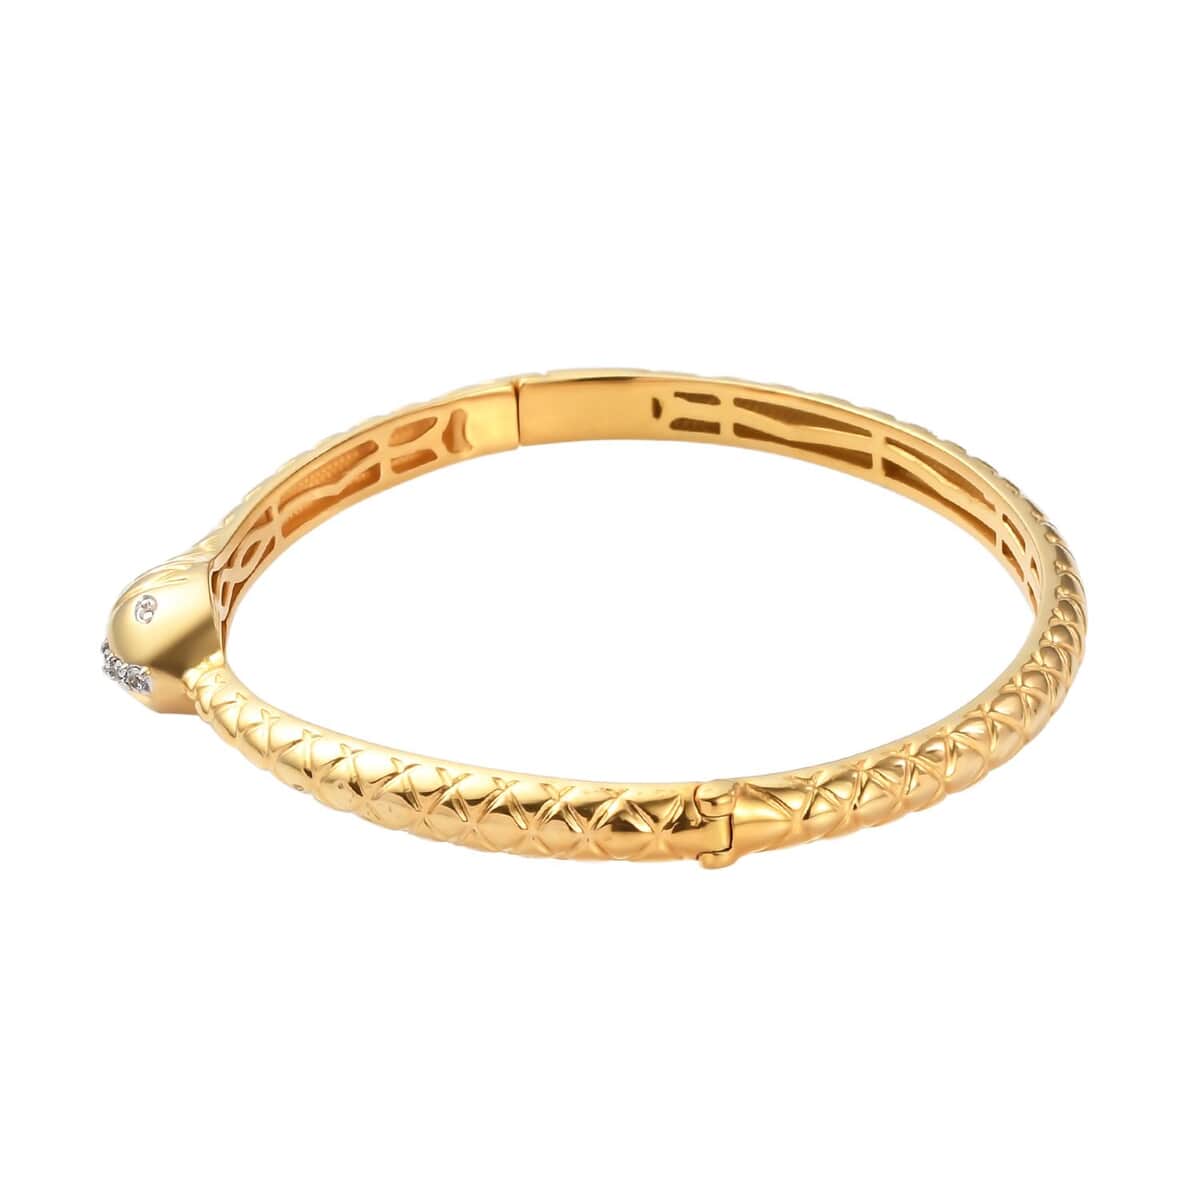 KARIS Natural White Zircon Eternal Love Snake Bangle Bracelet in 18K YG Plated (Size 7.25 In) 0.15 ctw image number 3